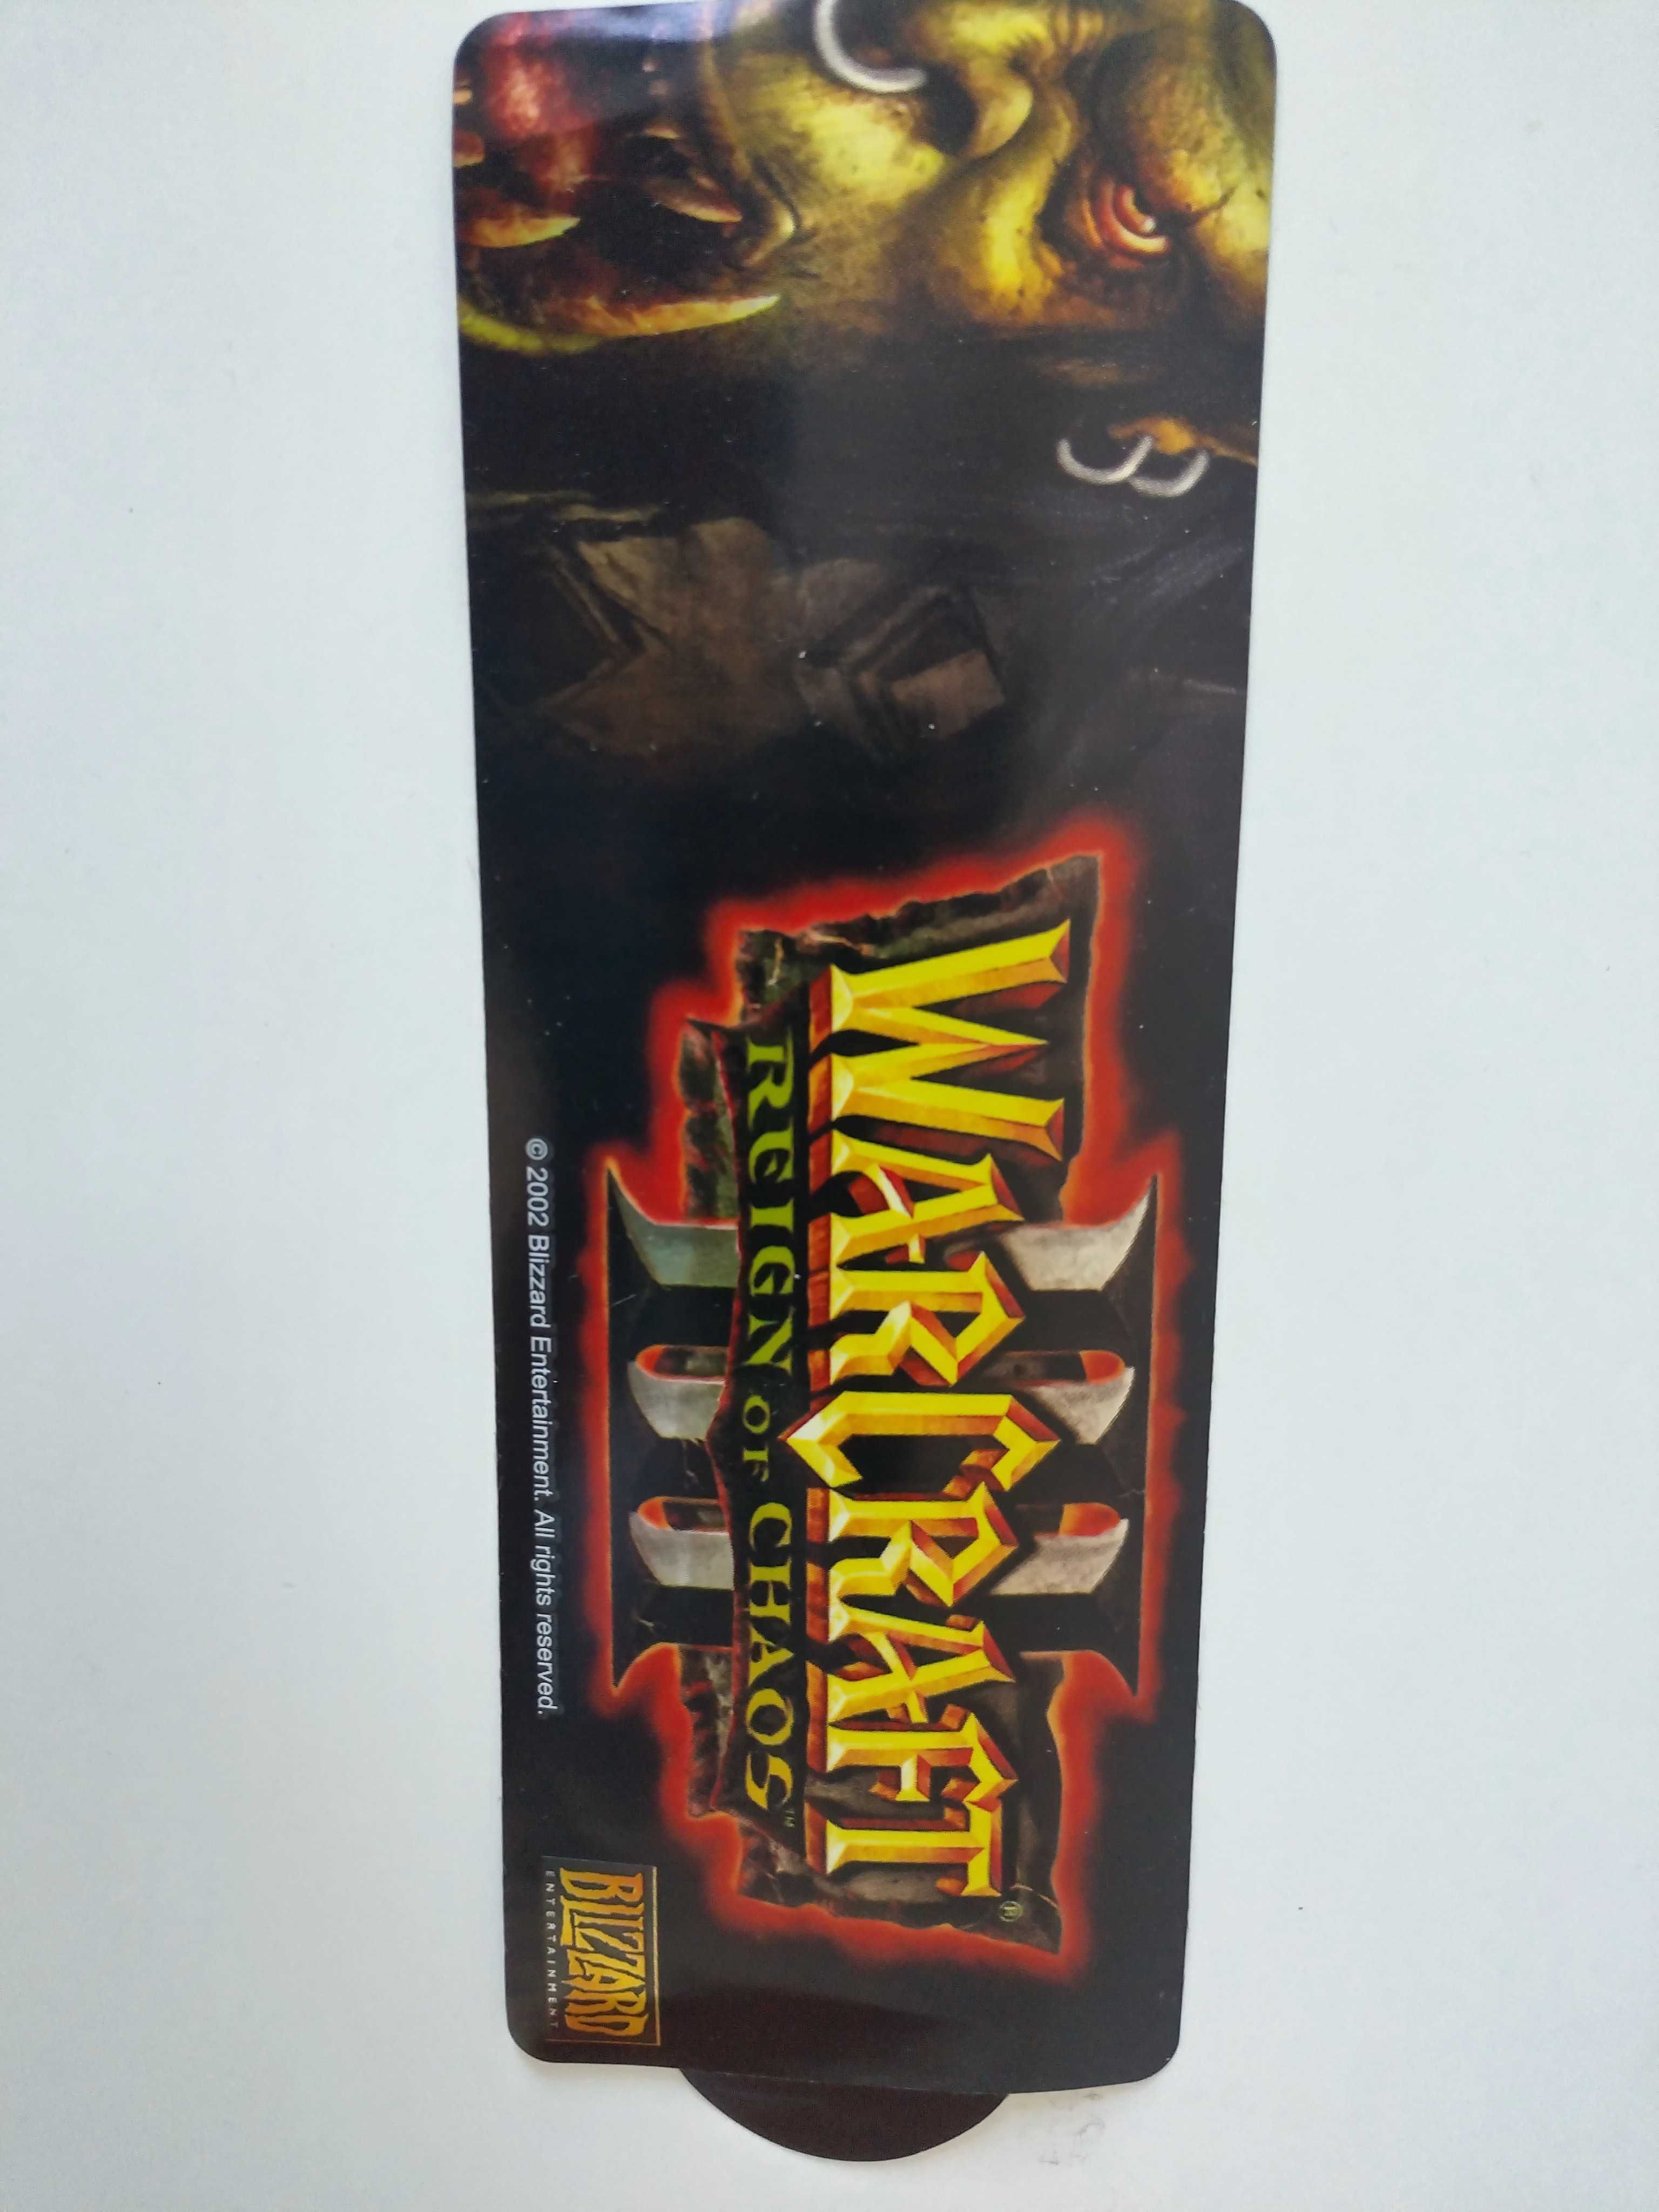 Warcraft 3 промо стикер